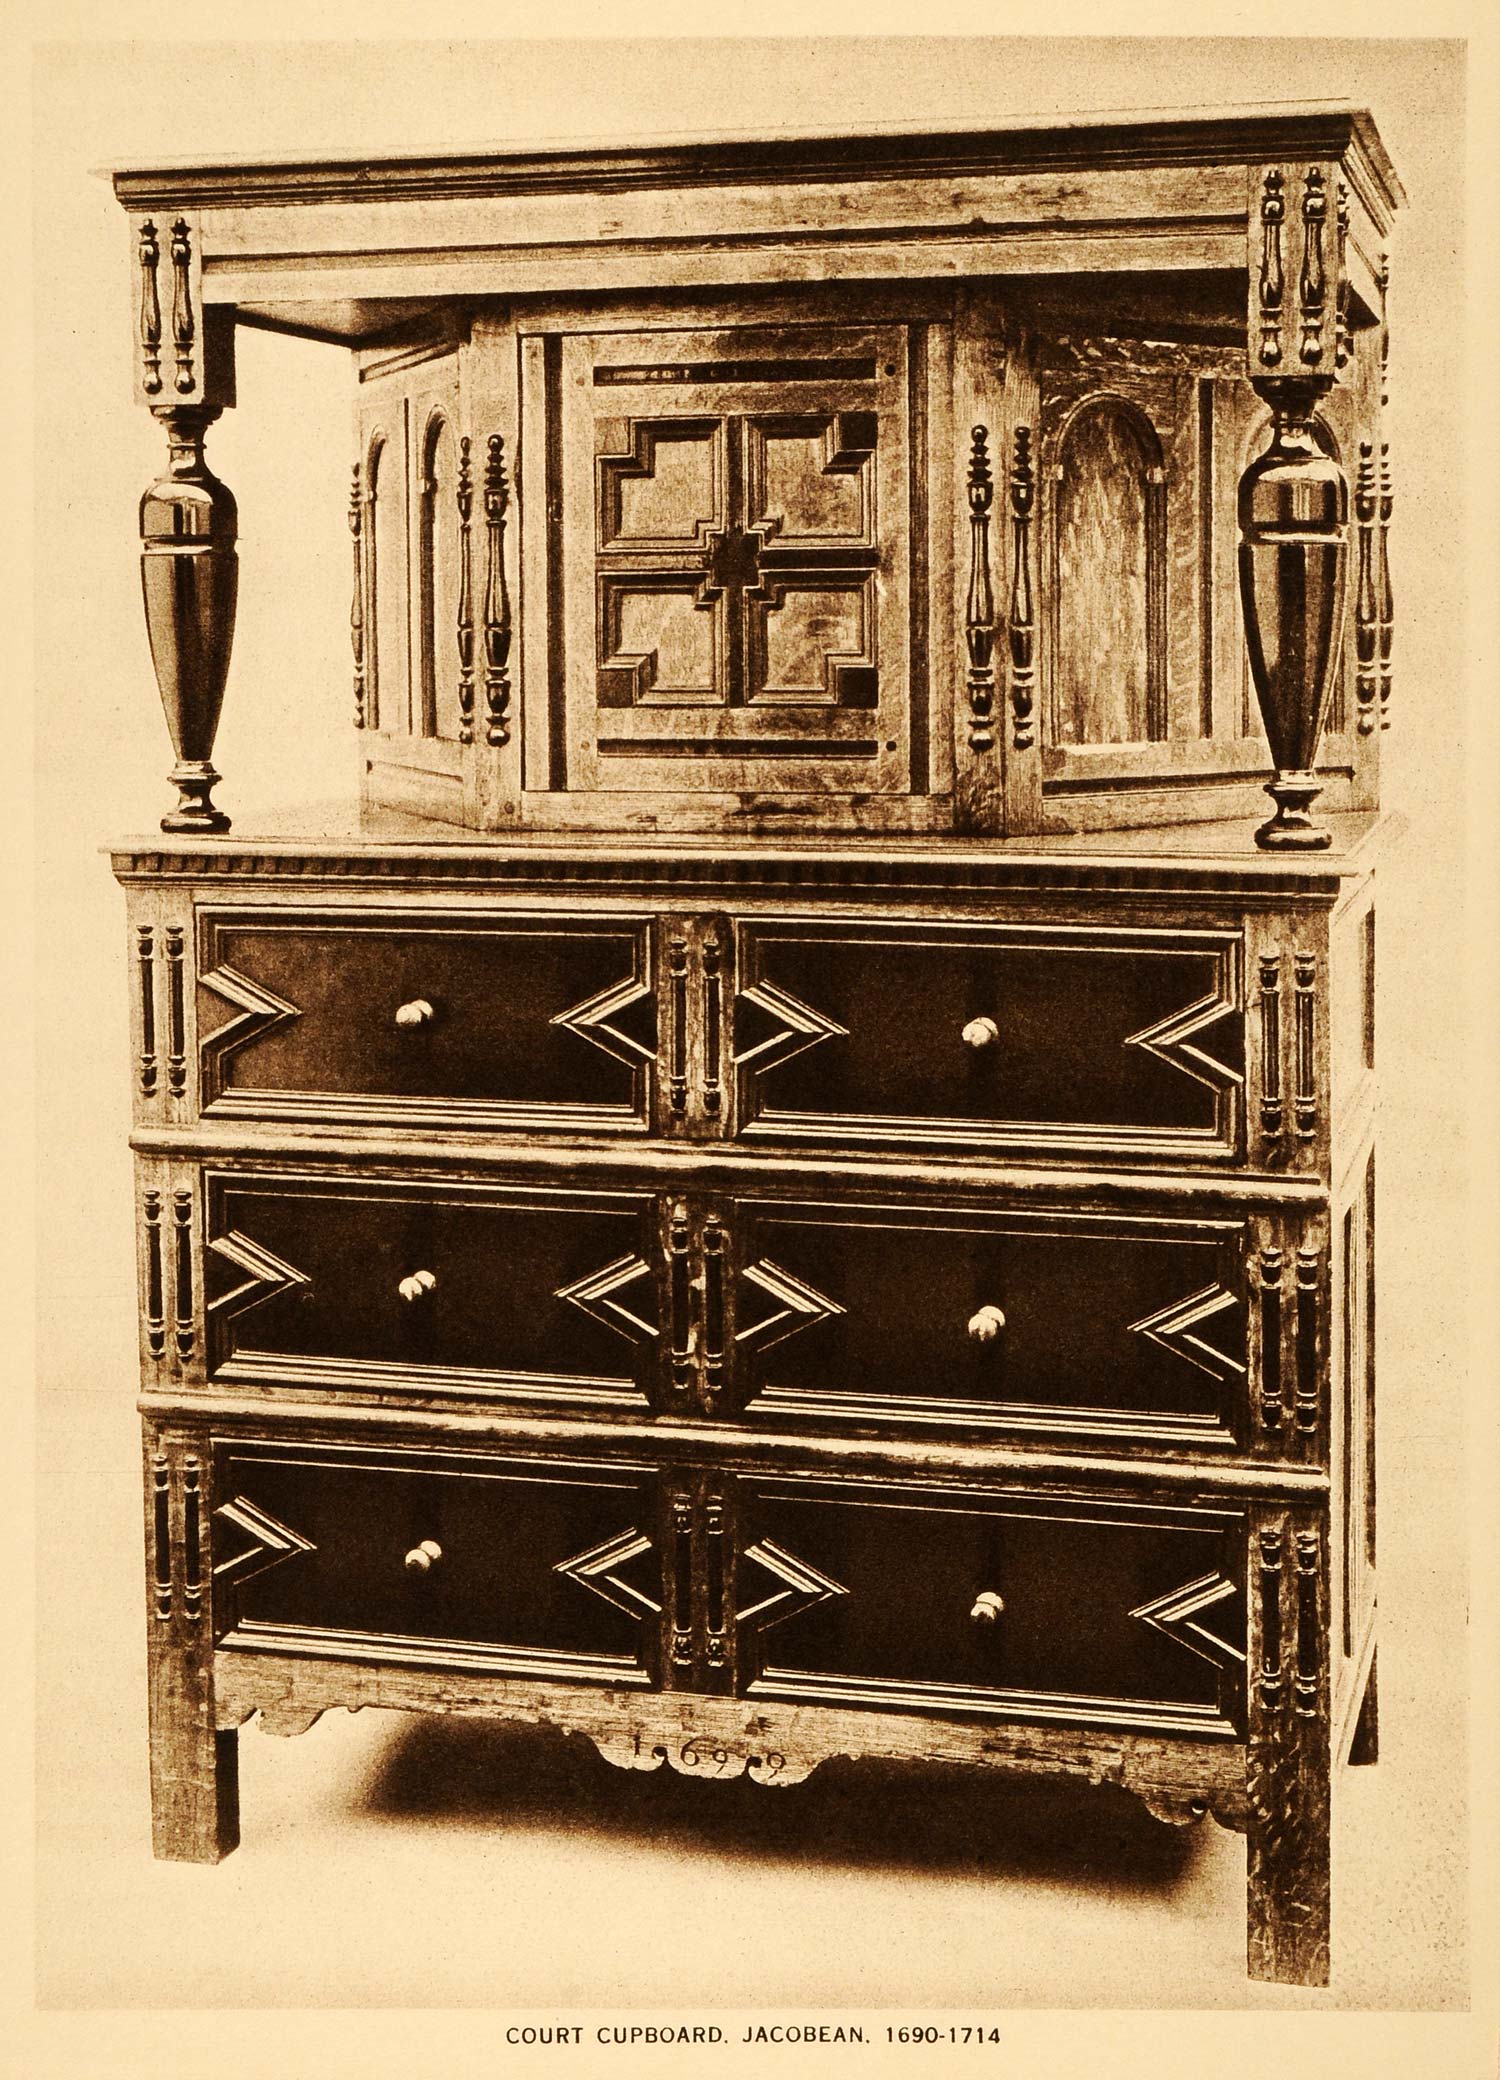 1914 Intaglio Print Jacobean Court Cupboard Furniture Chest Drawers Antique TMM1